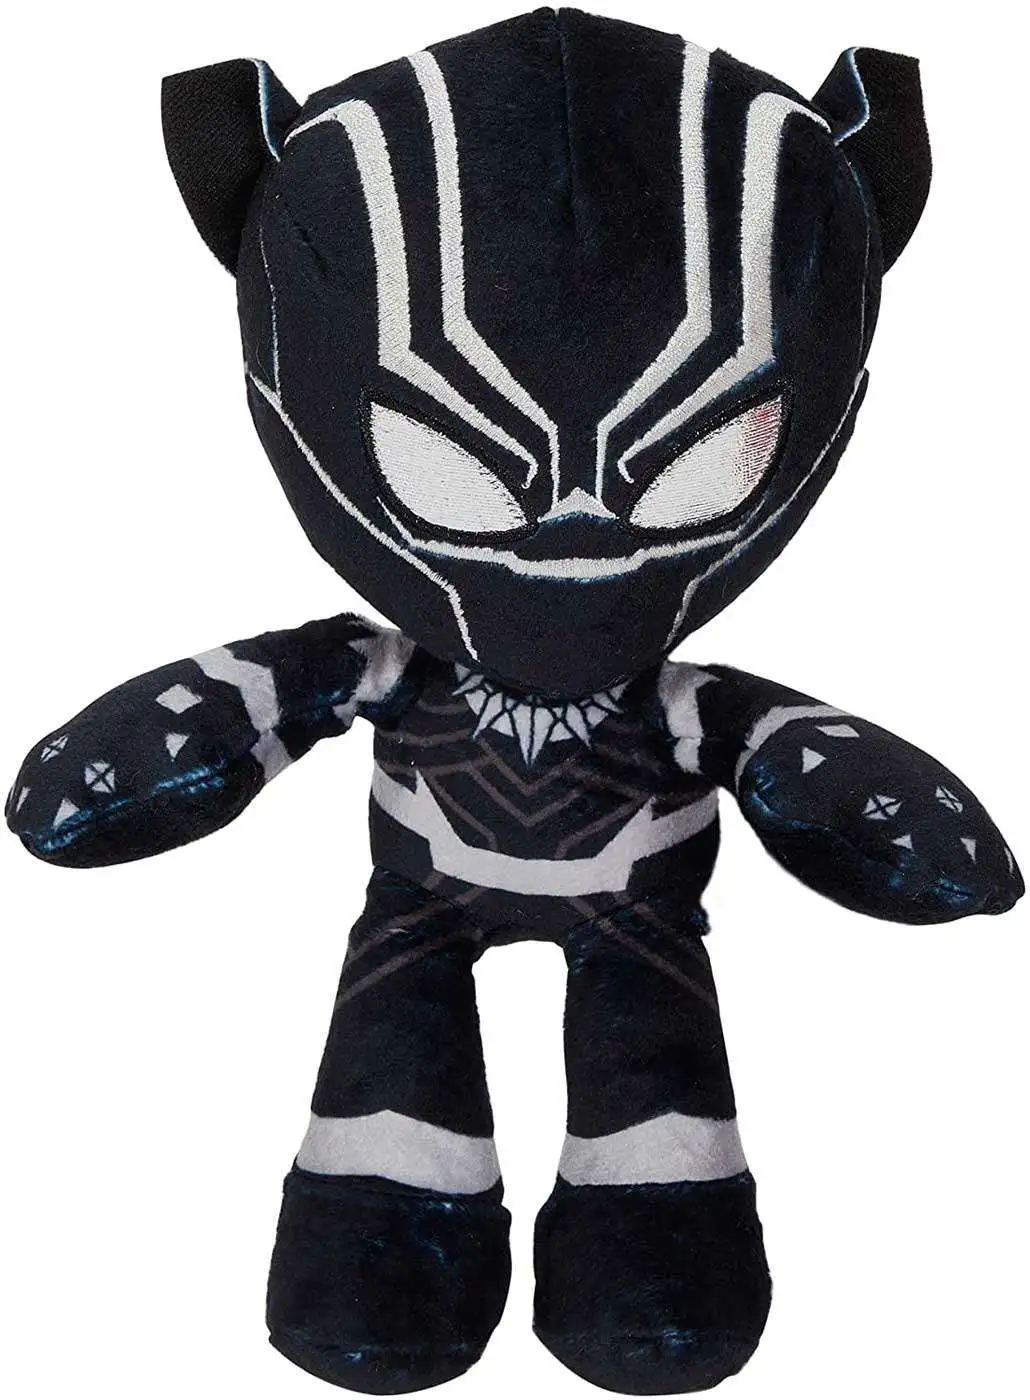 Marvel Black Panther 9-Inch Plush